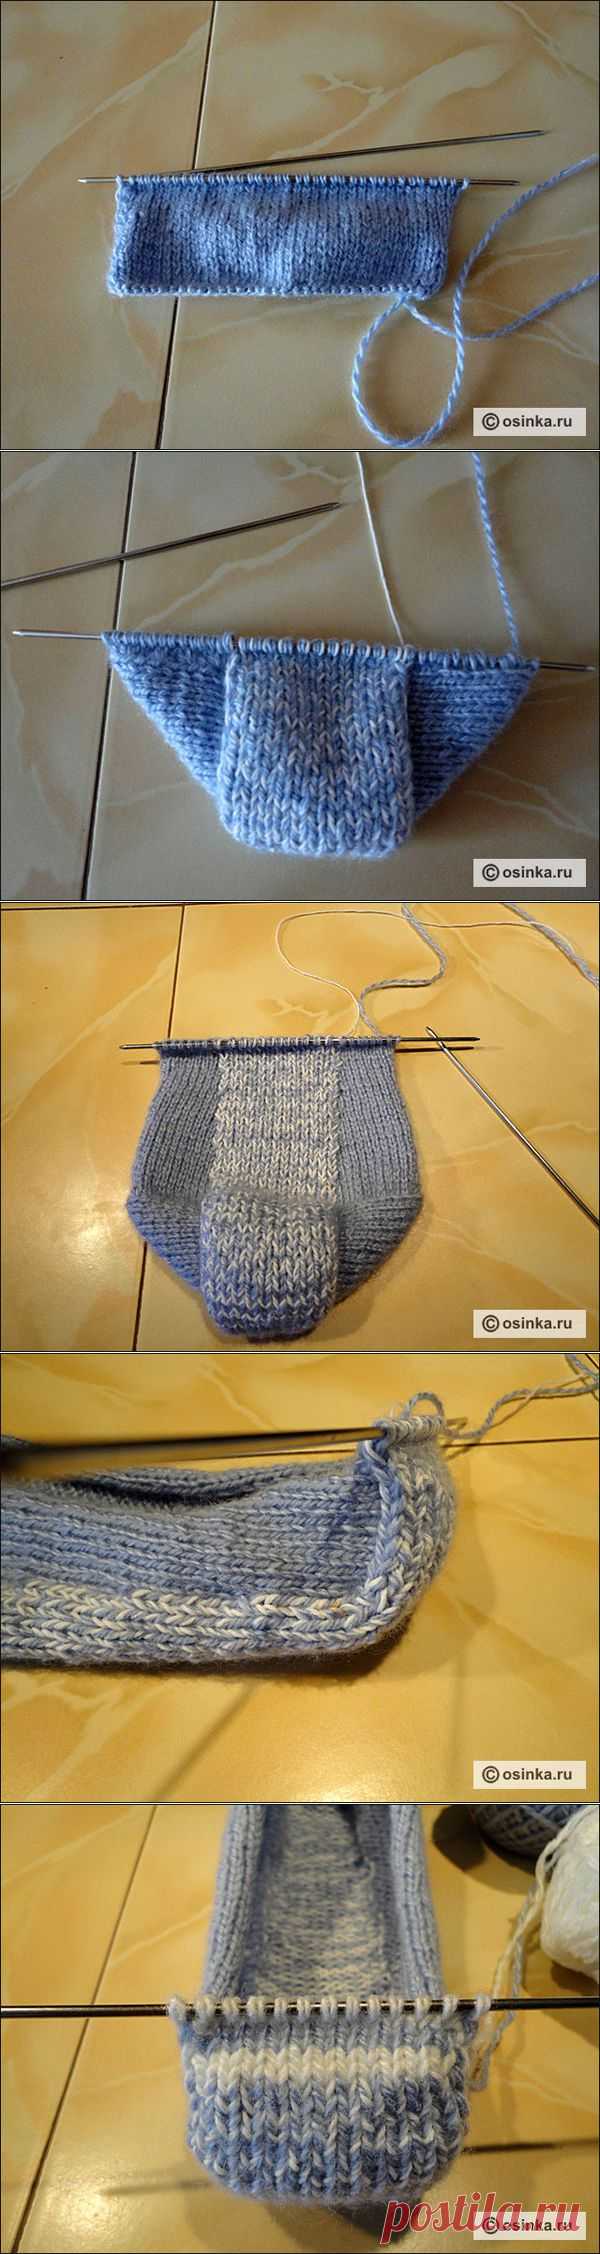 Вязание спицами - тапочки